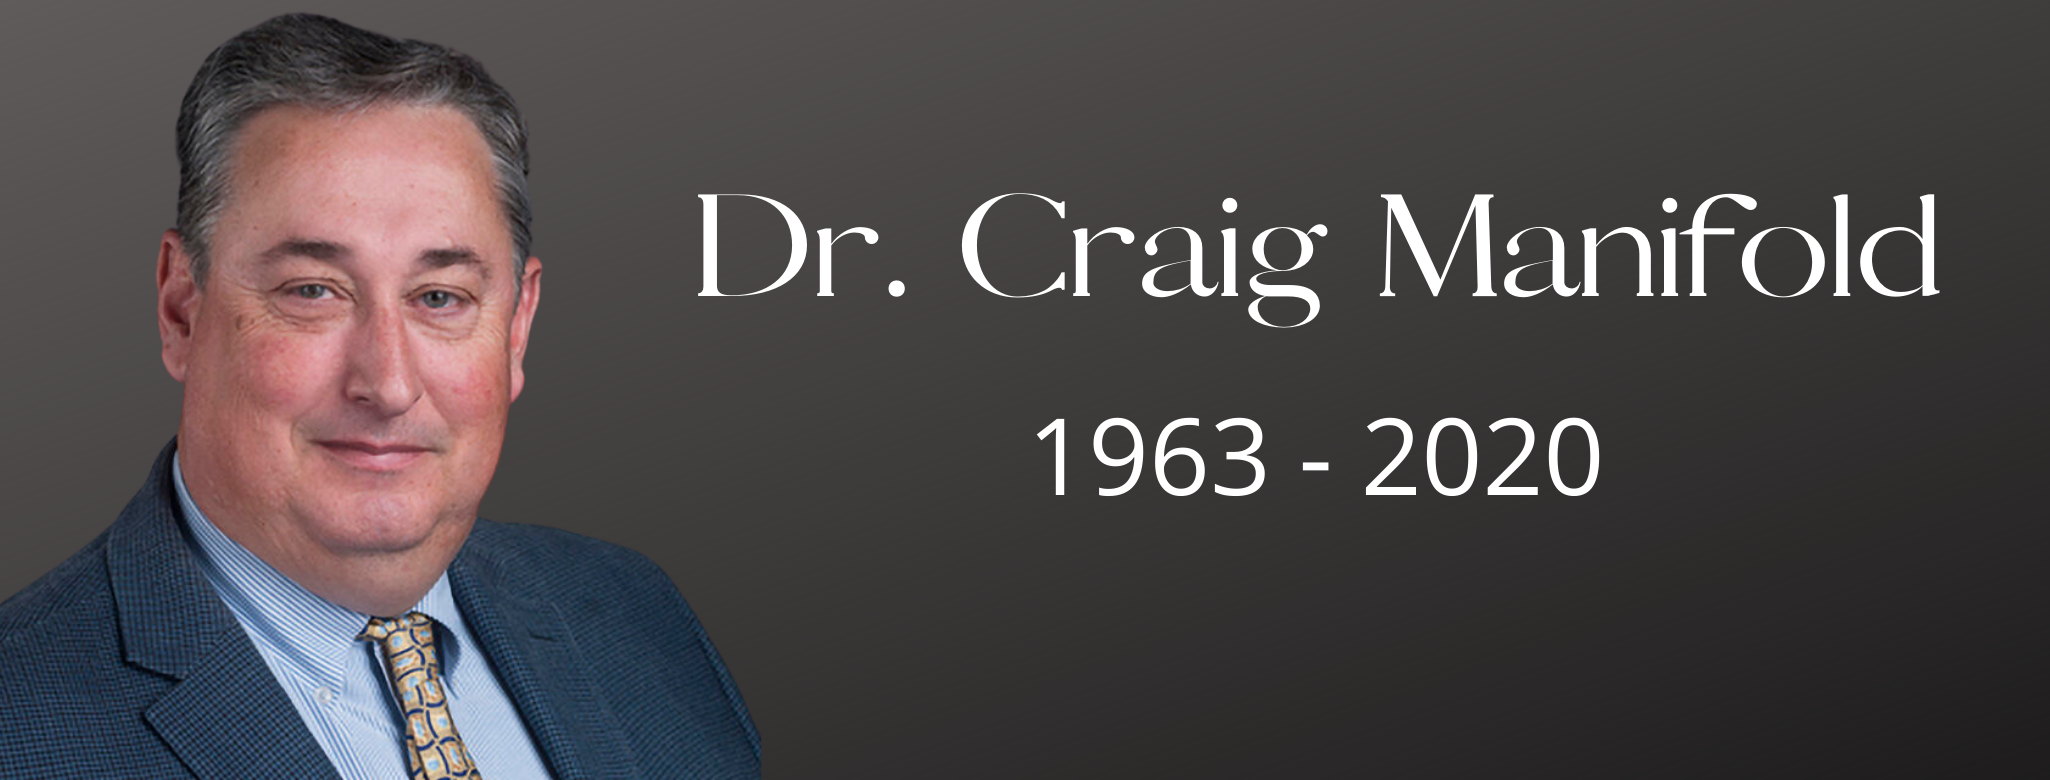 Remembering Craig Manifold